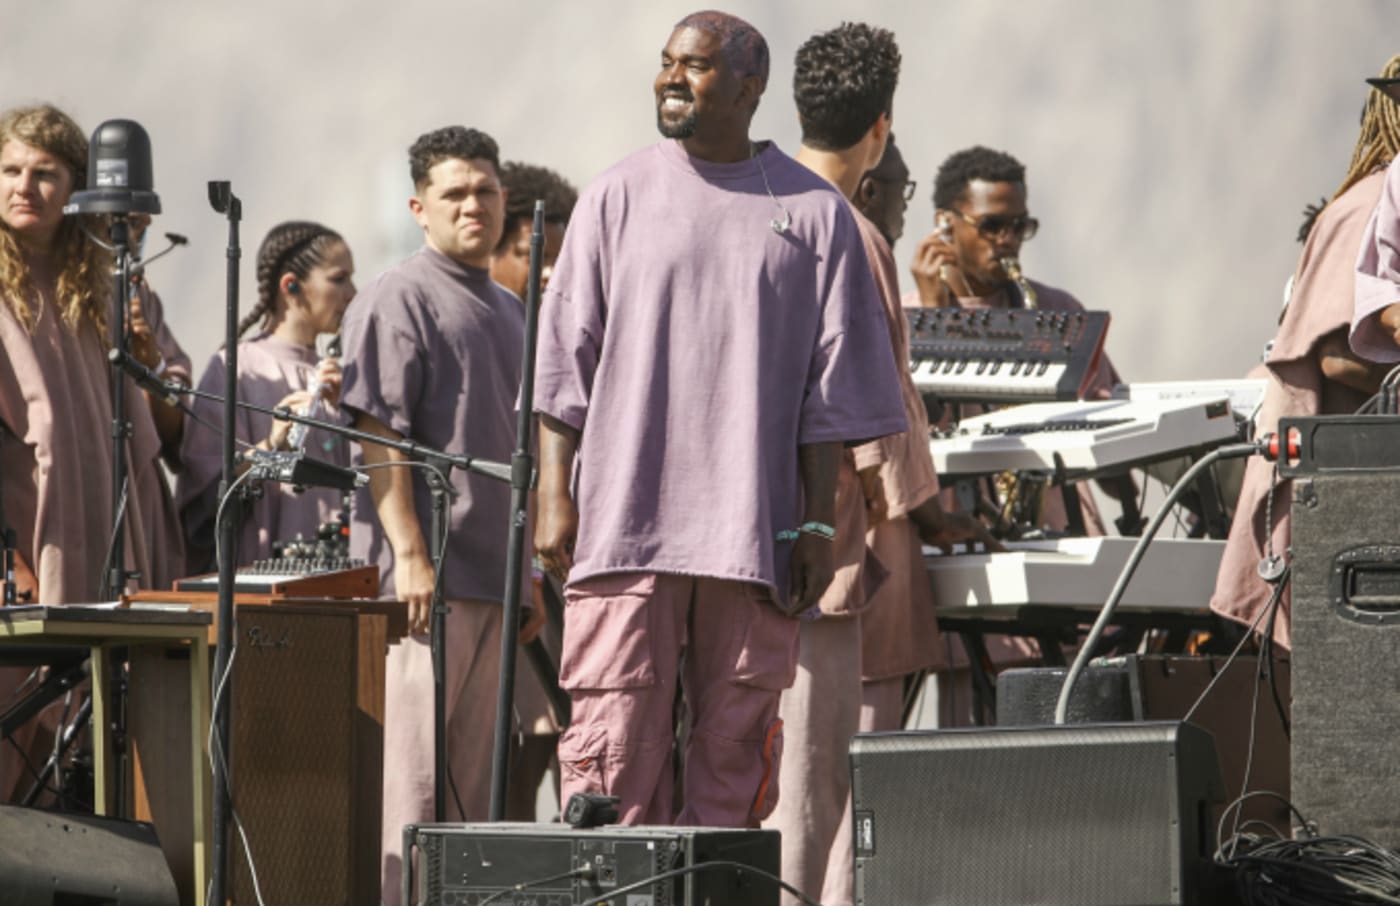 Kanye West performs Sunday Service